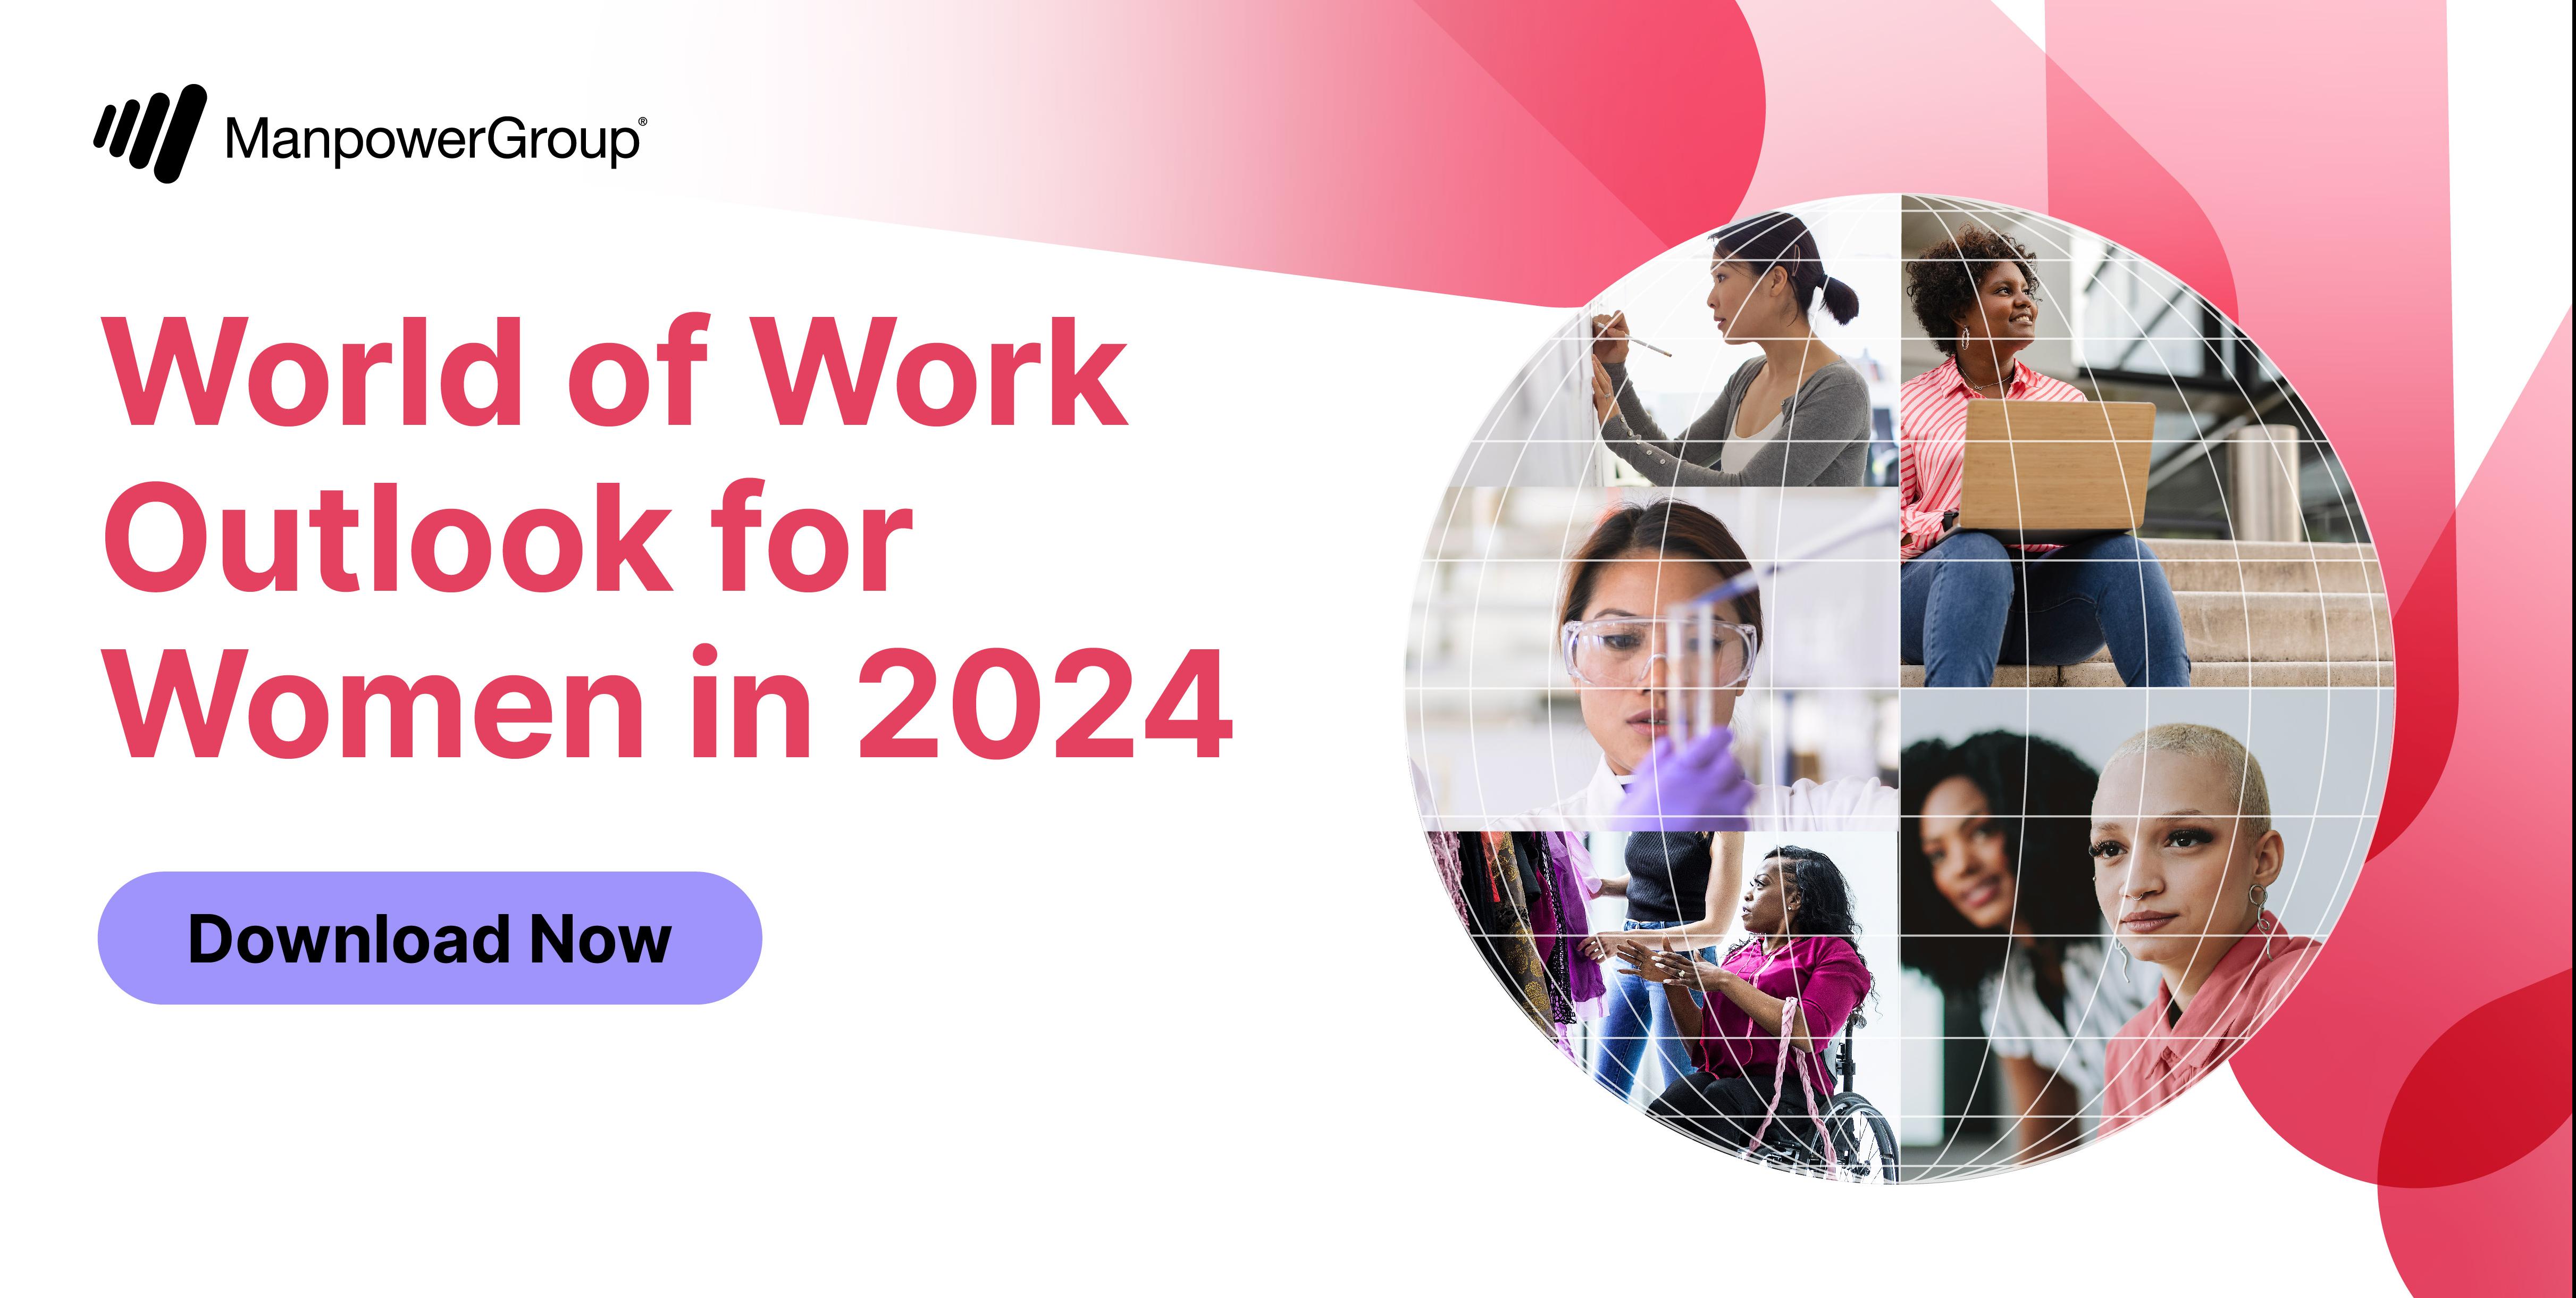 World of Work Outlook for Women in 2024